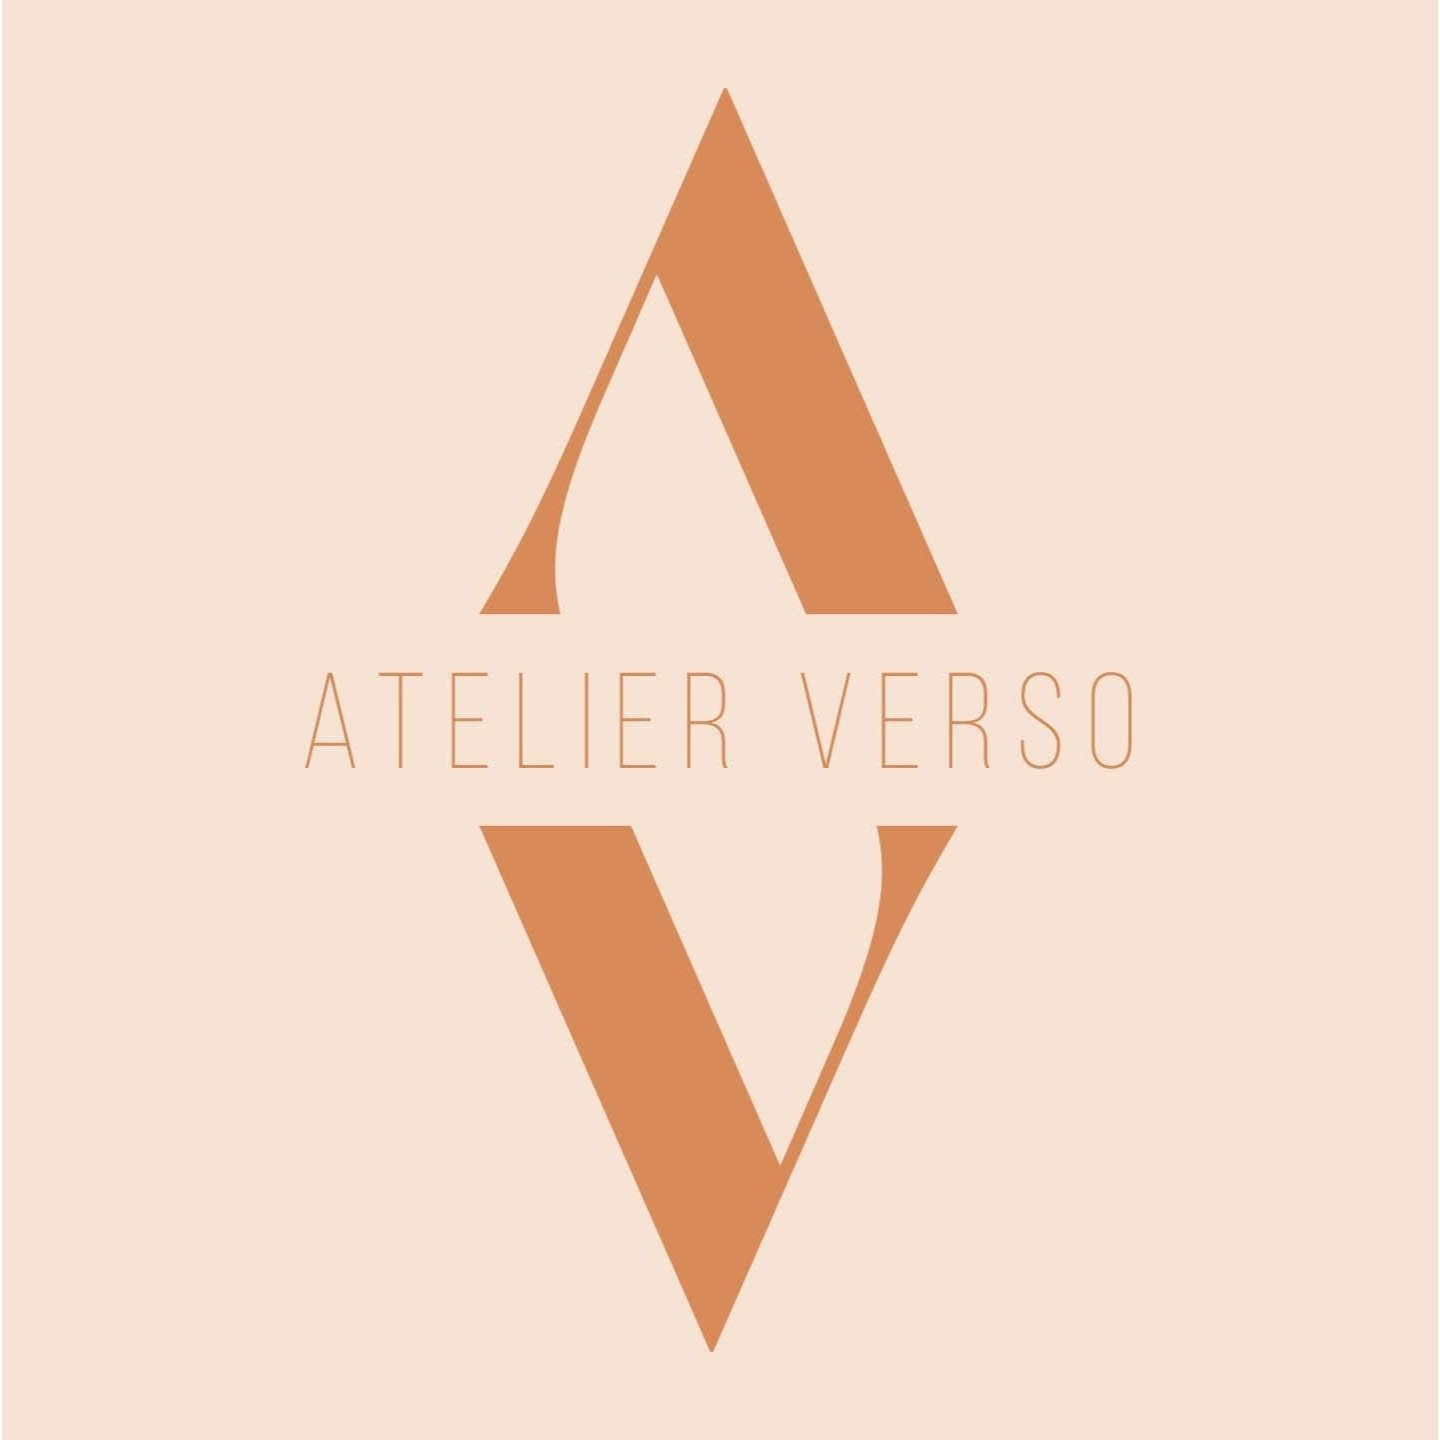 Atelier Verso - Interior Designers